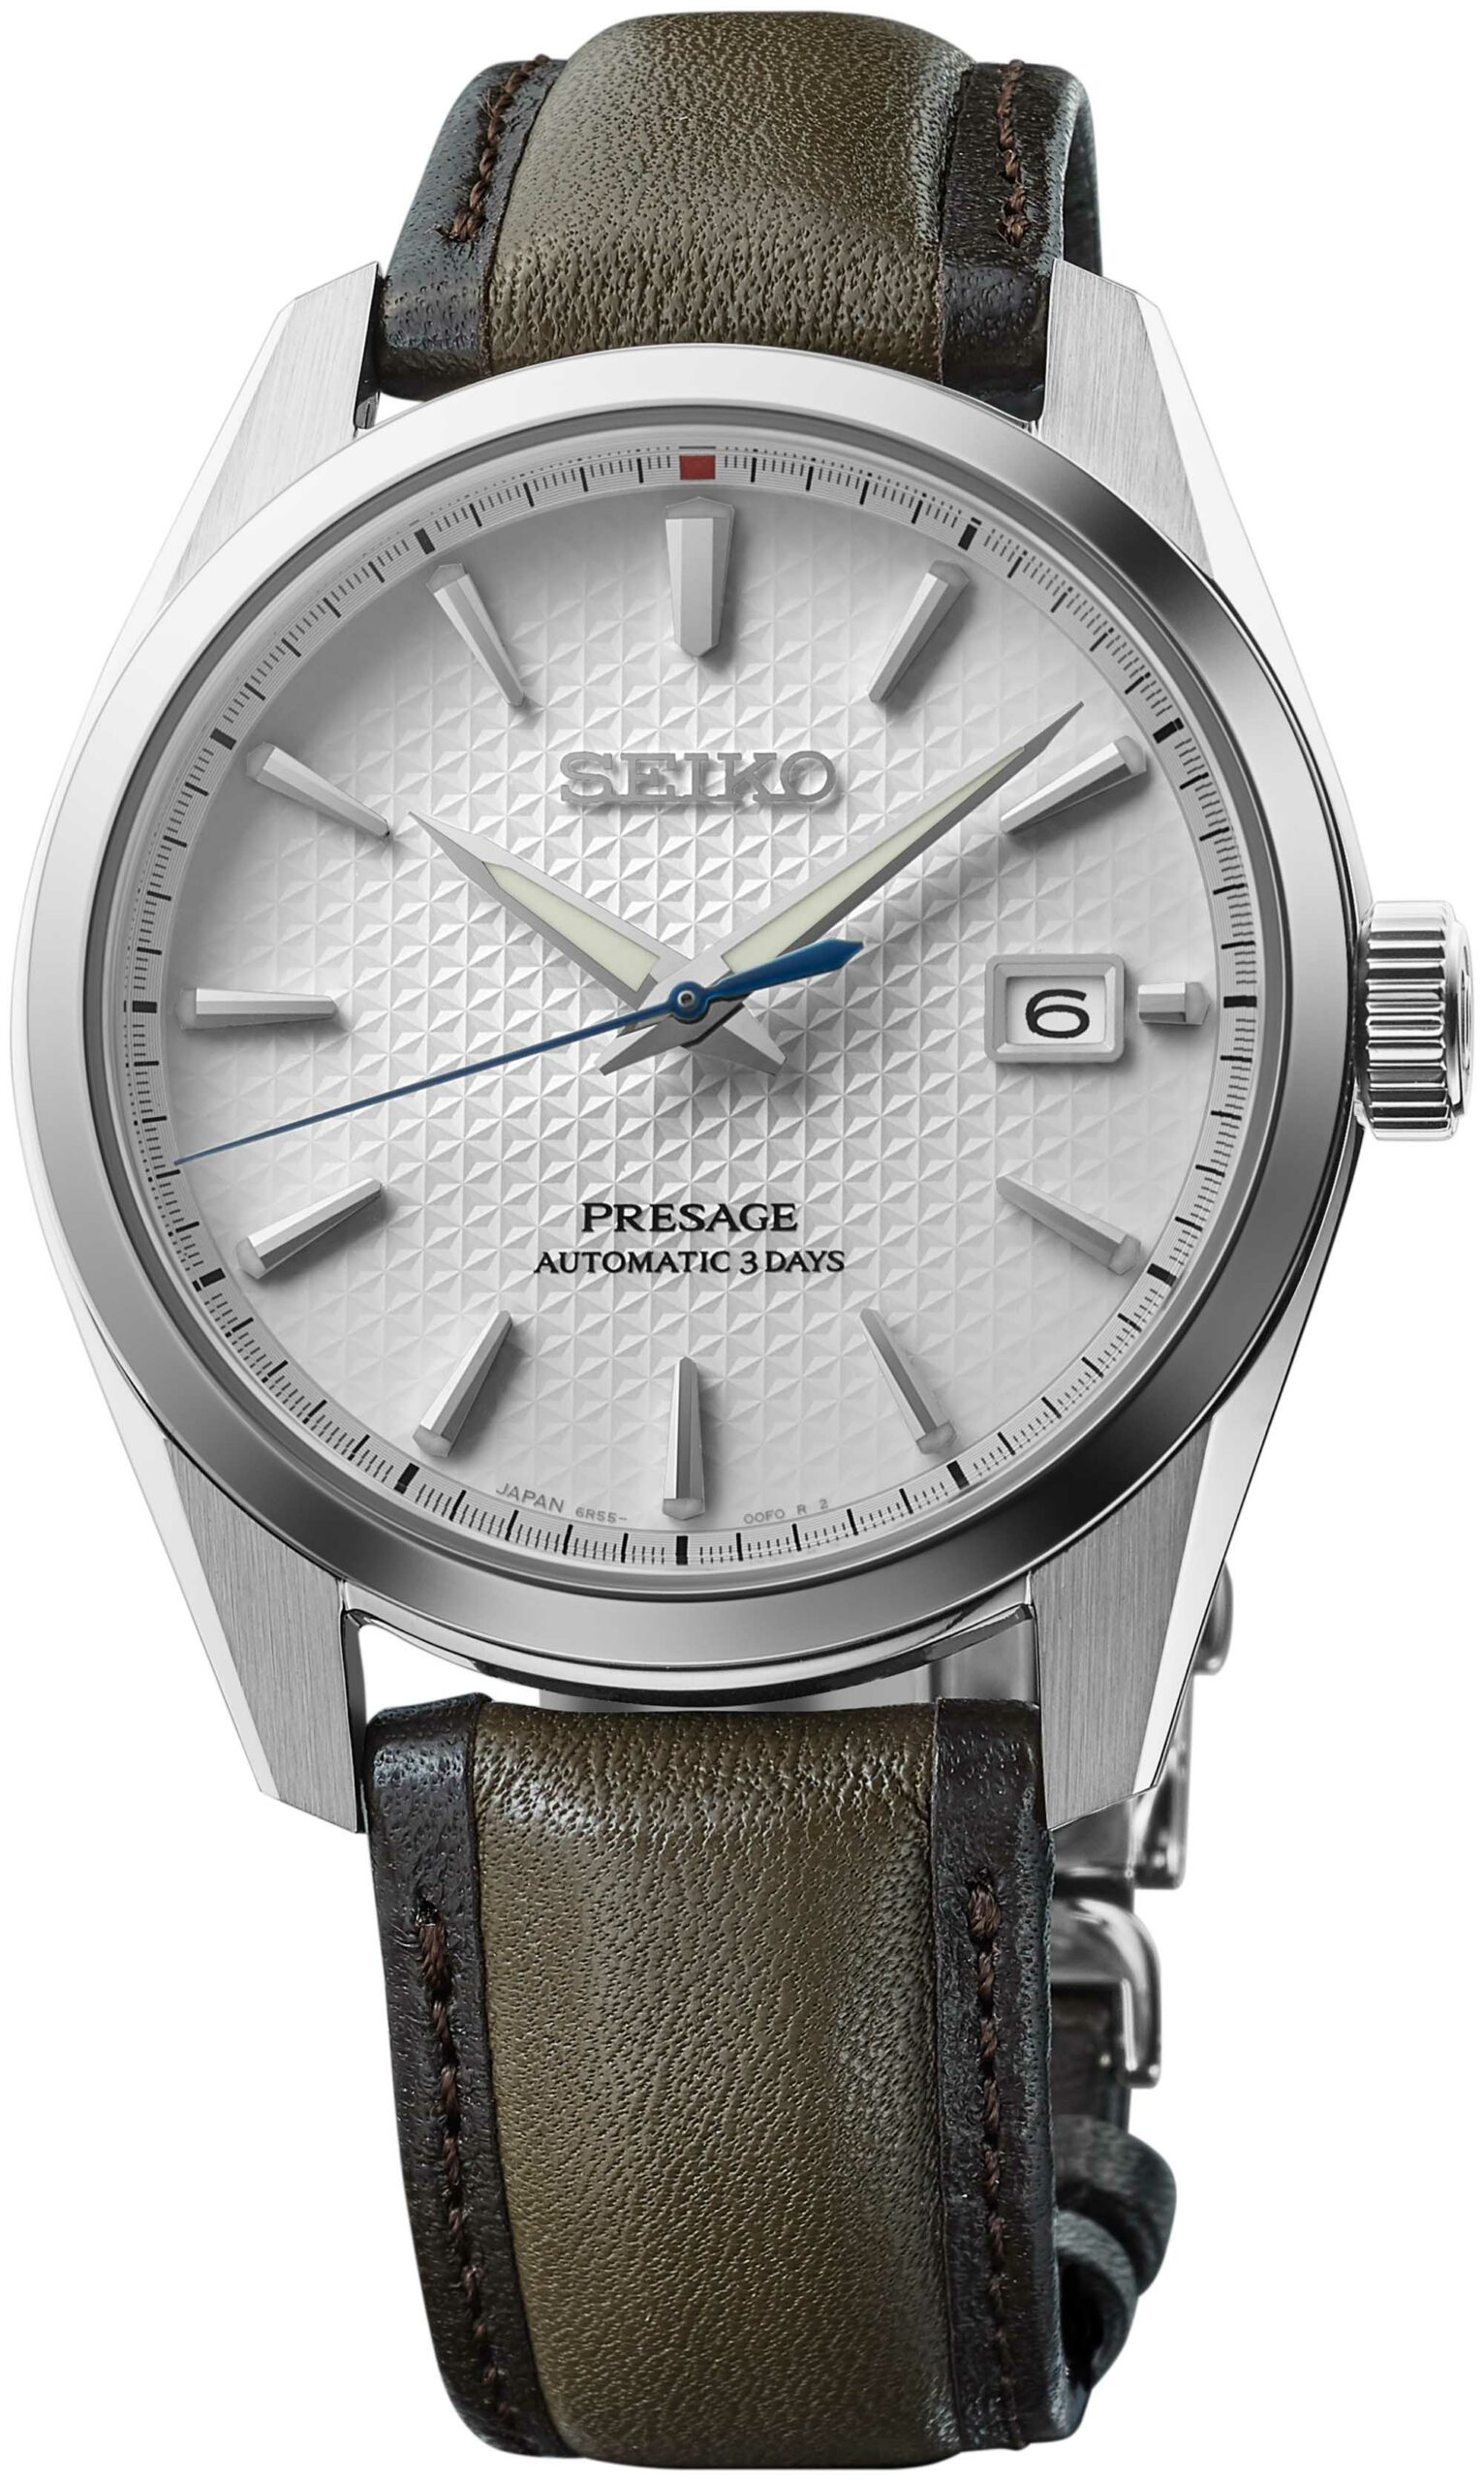 Новый выпуск: Часы Seiko Presage, Prospex, Astron и 5 Sports 110th Anniversary